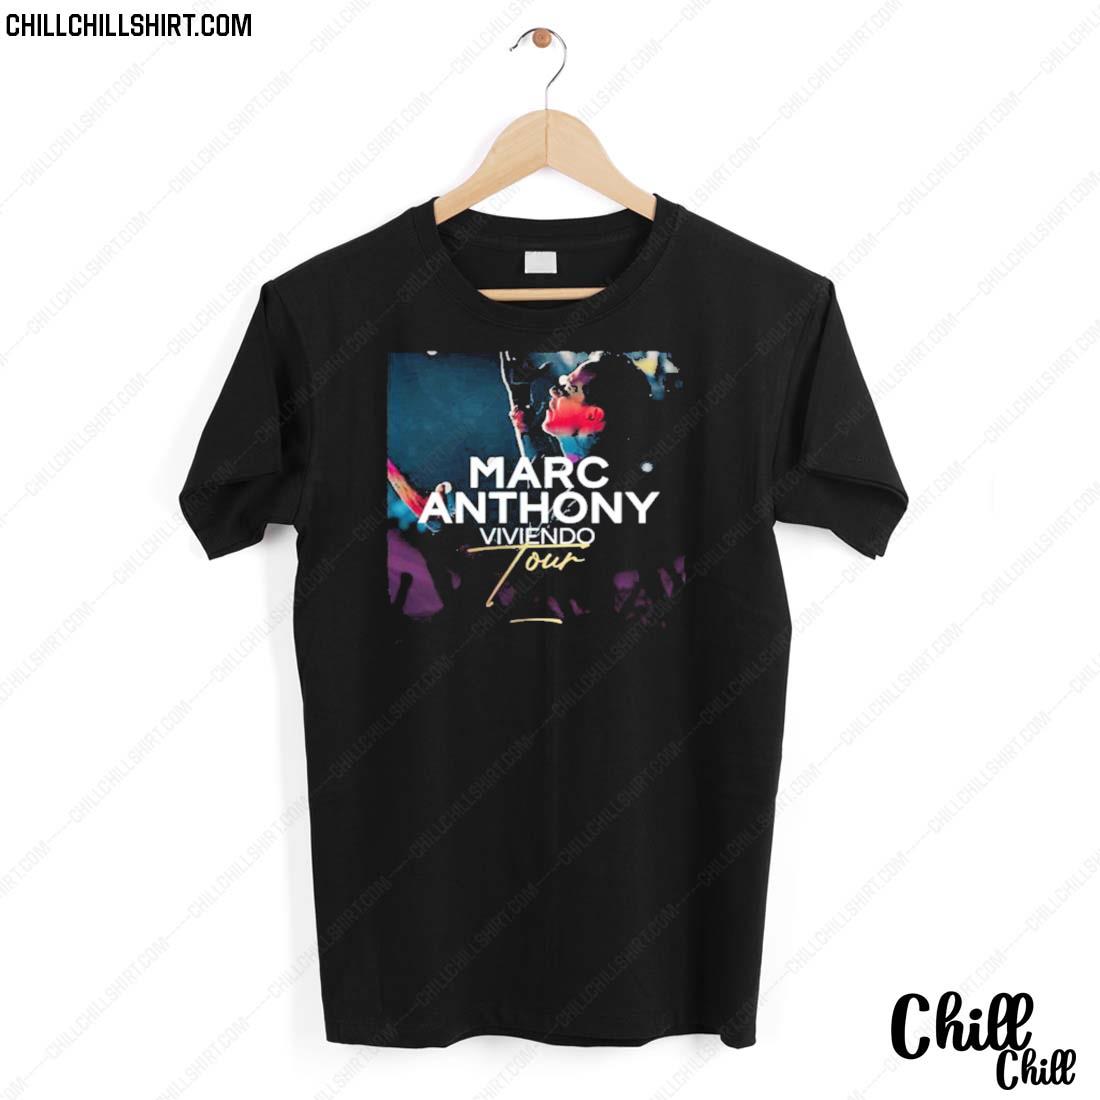 Nice viviendo Tour Marc Anthony T-shirt